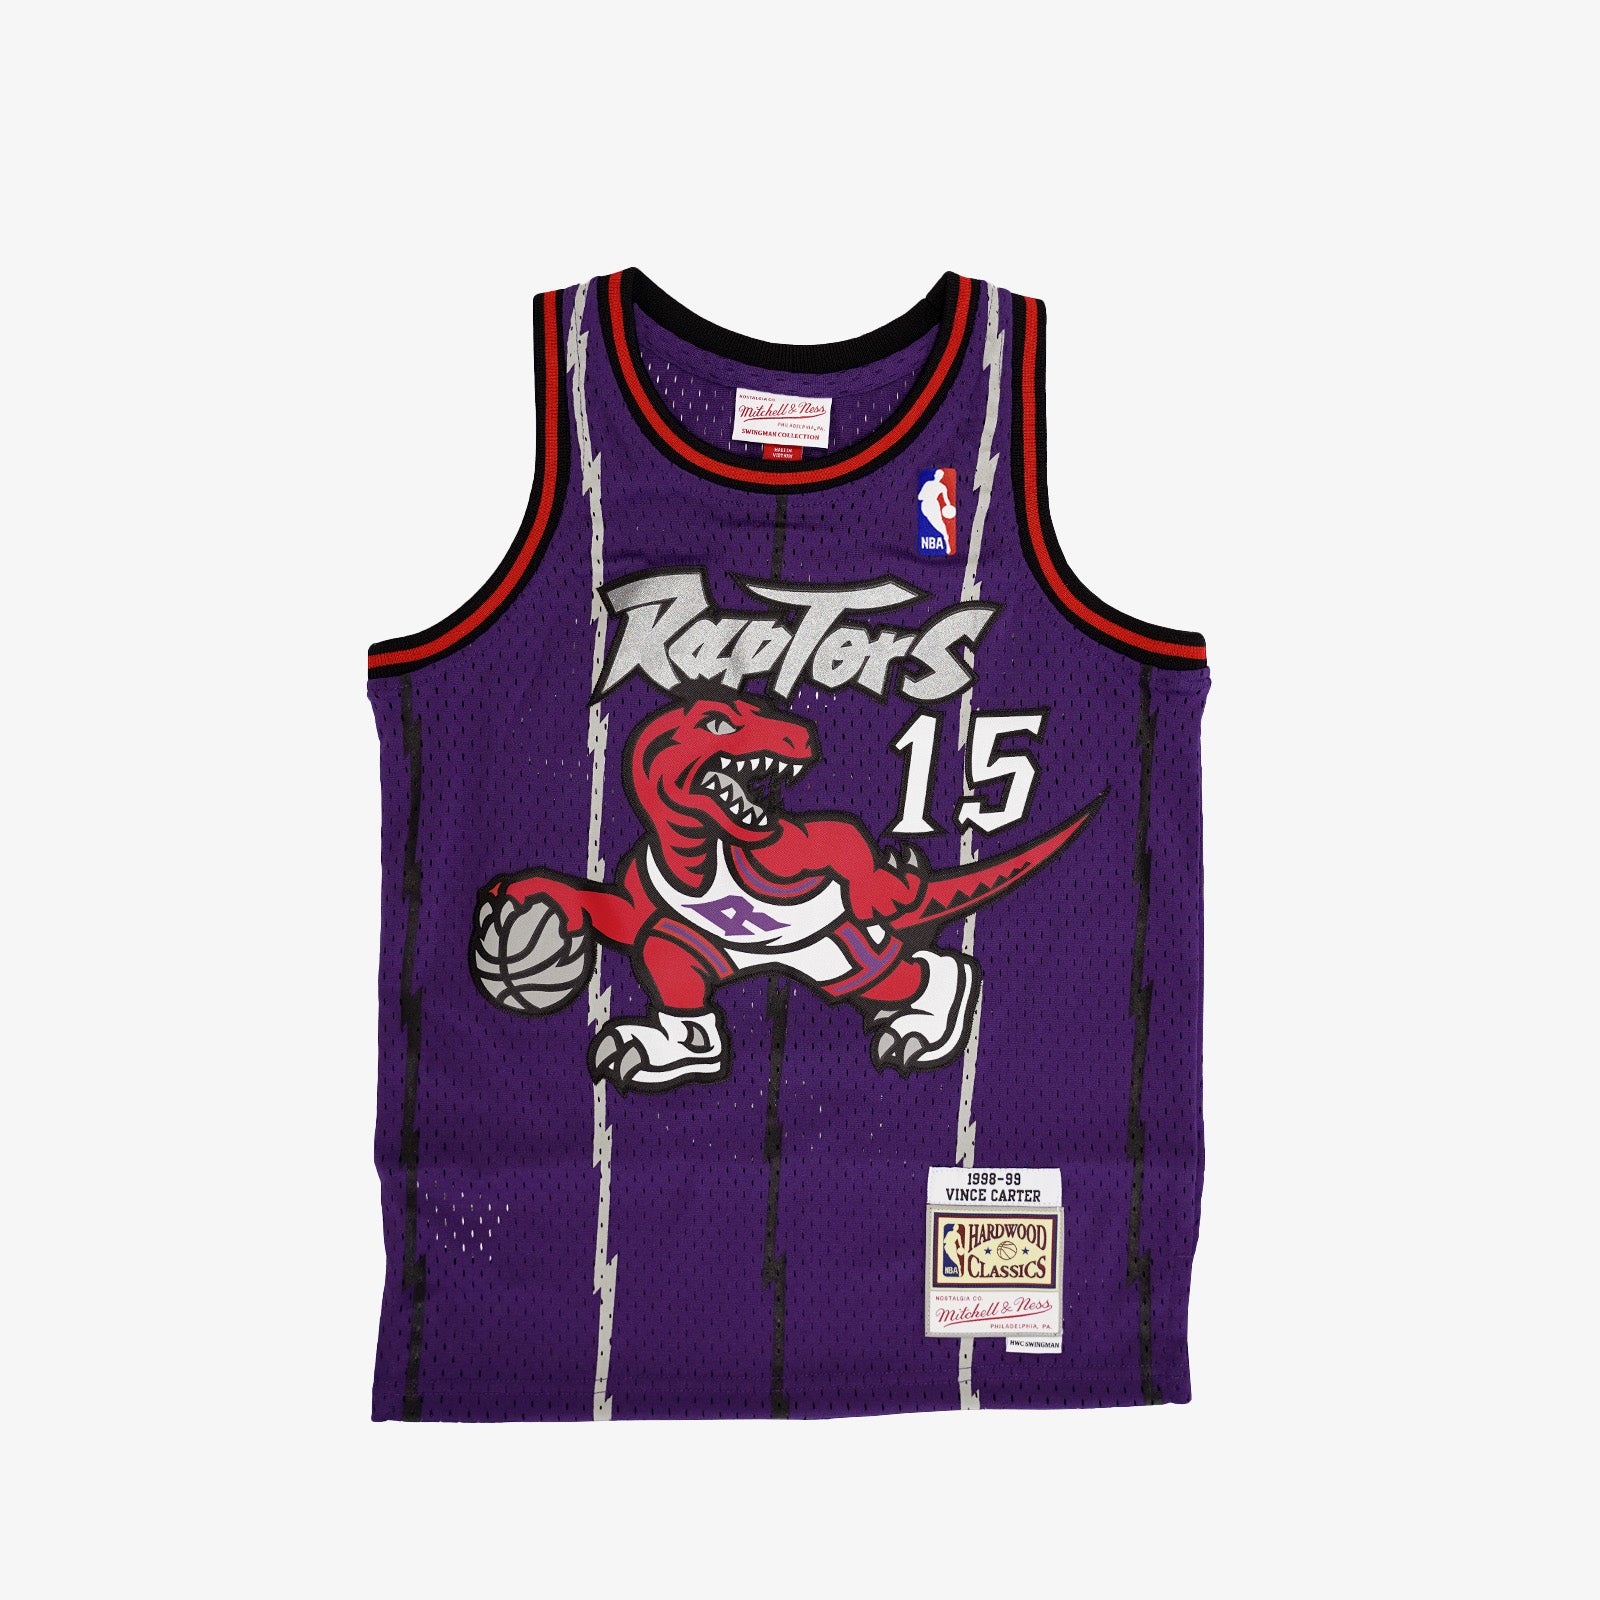 Vince Carter Toronto Raptors 1998-99 Mitchell & Ness Throwback Jersey  Sz XL